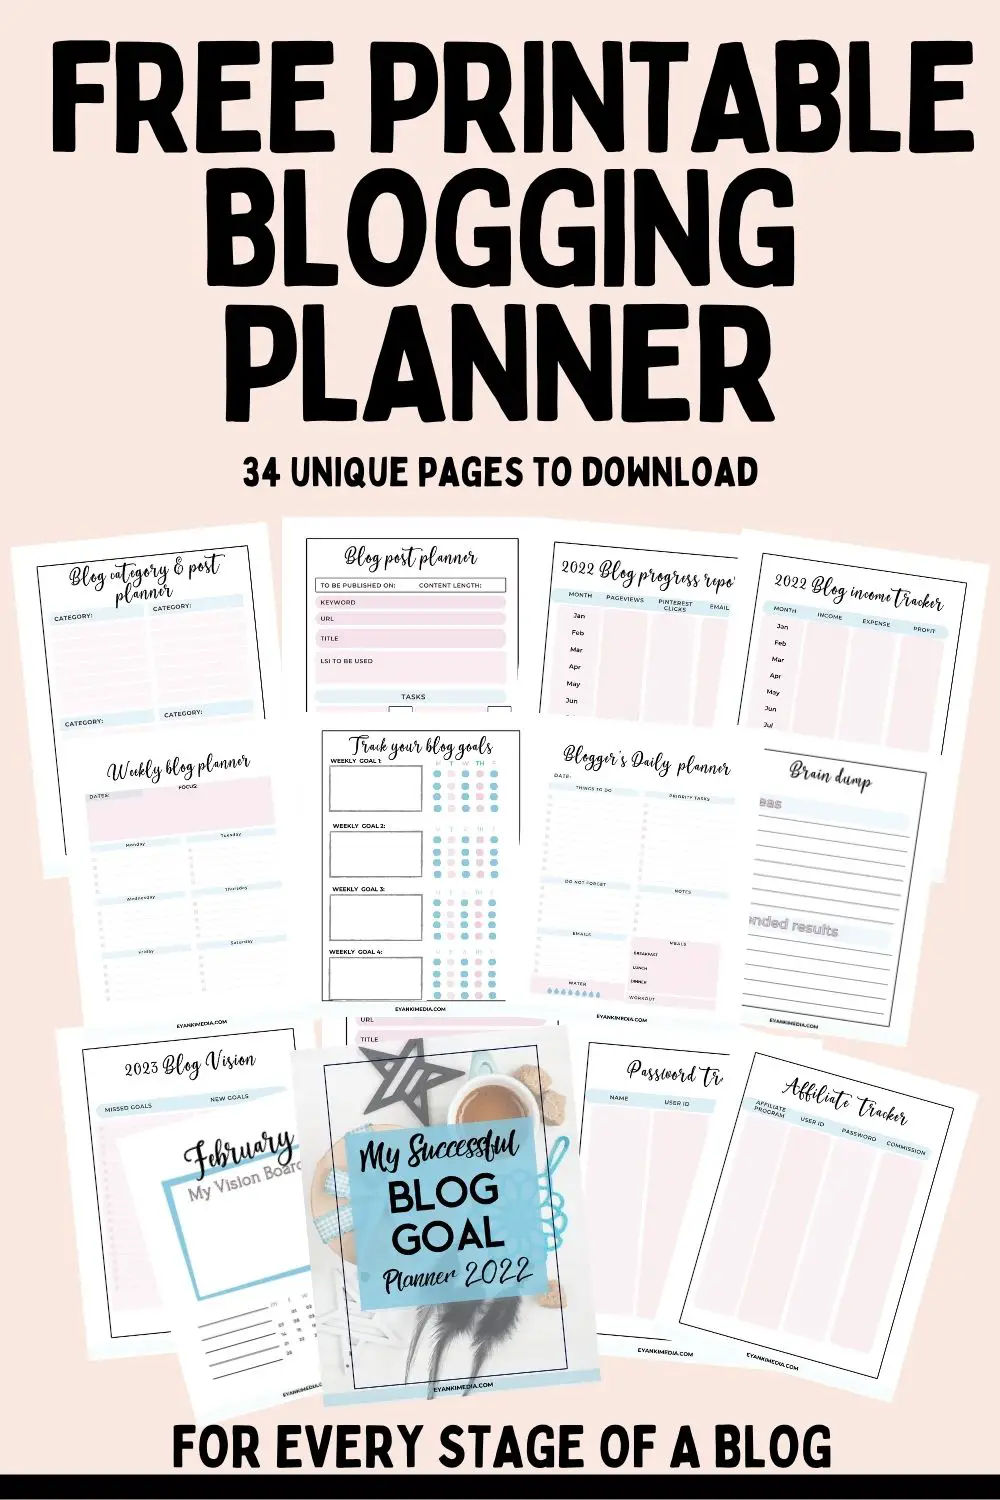 Free printable Blogging planner